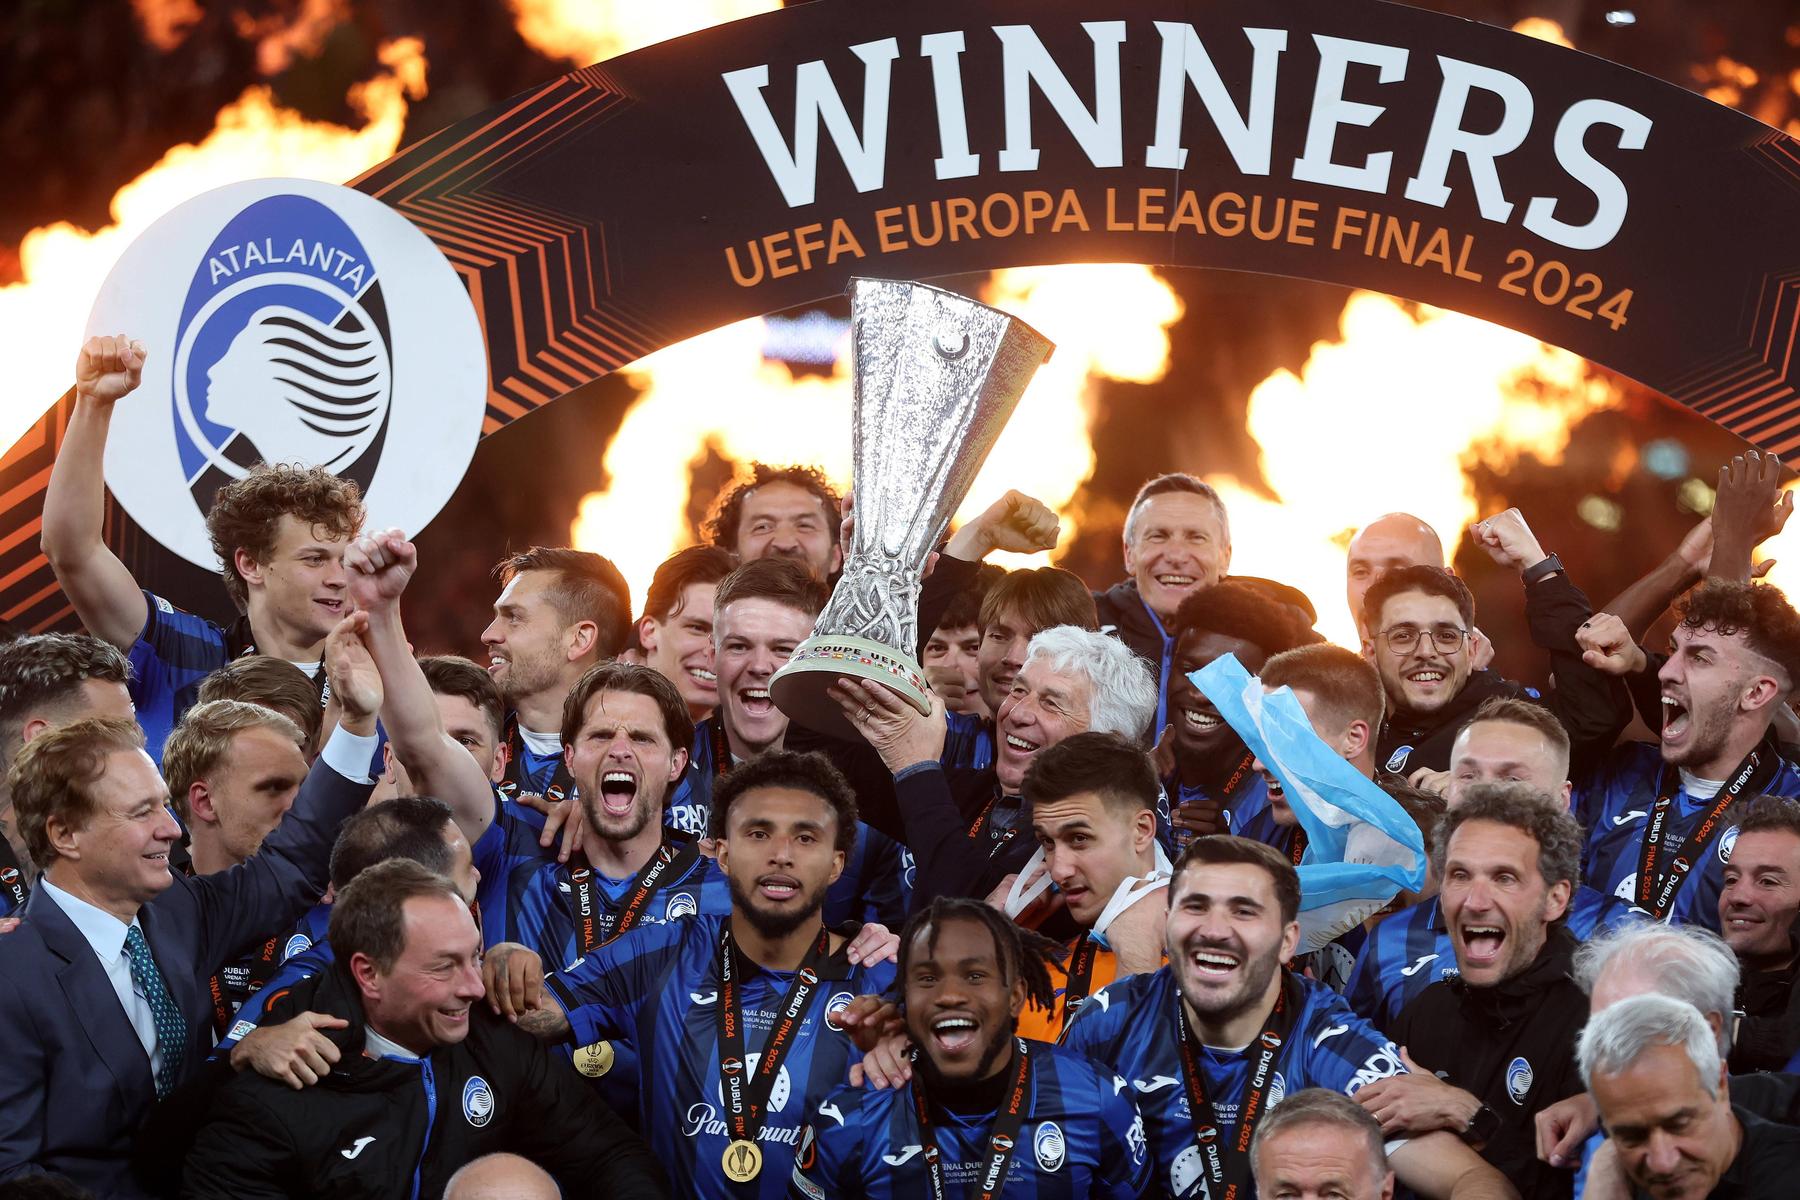 Internationale Pressestimmen: So hat die internationale Presse das Europa-League-Finale kommentiert